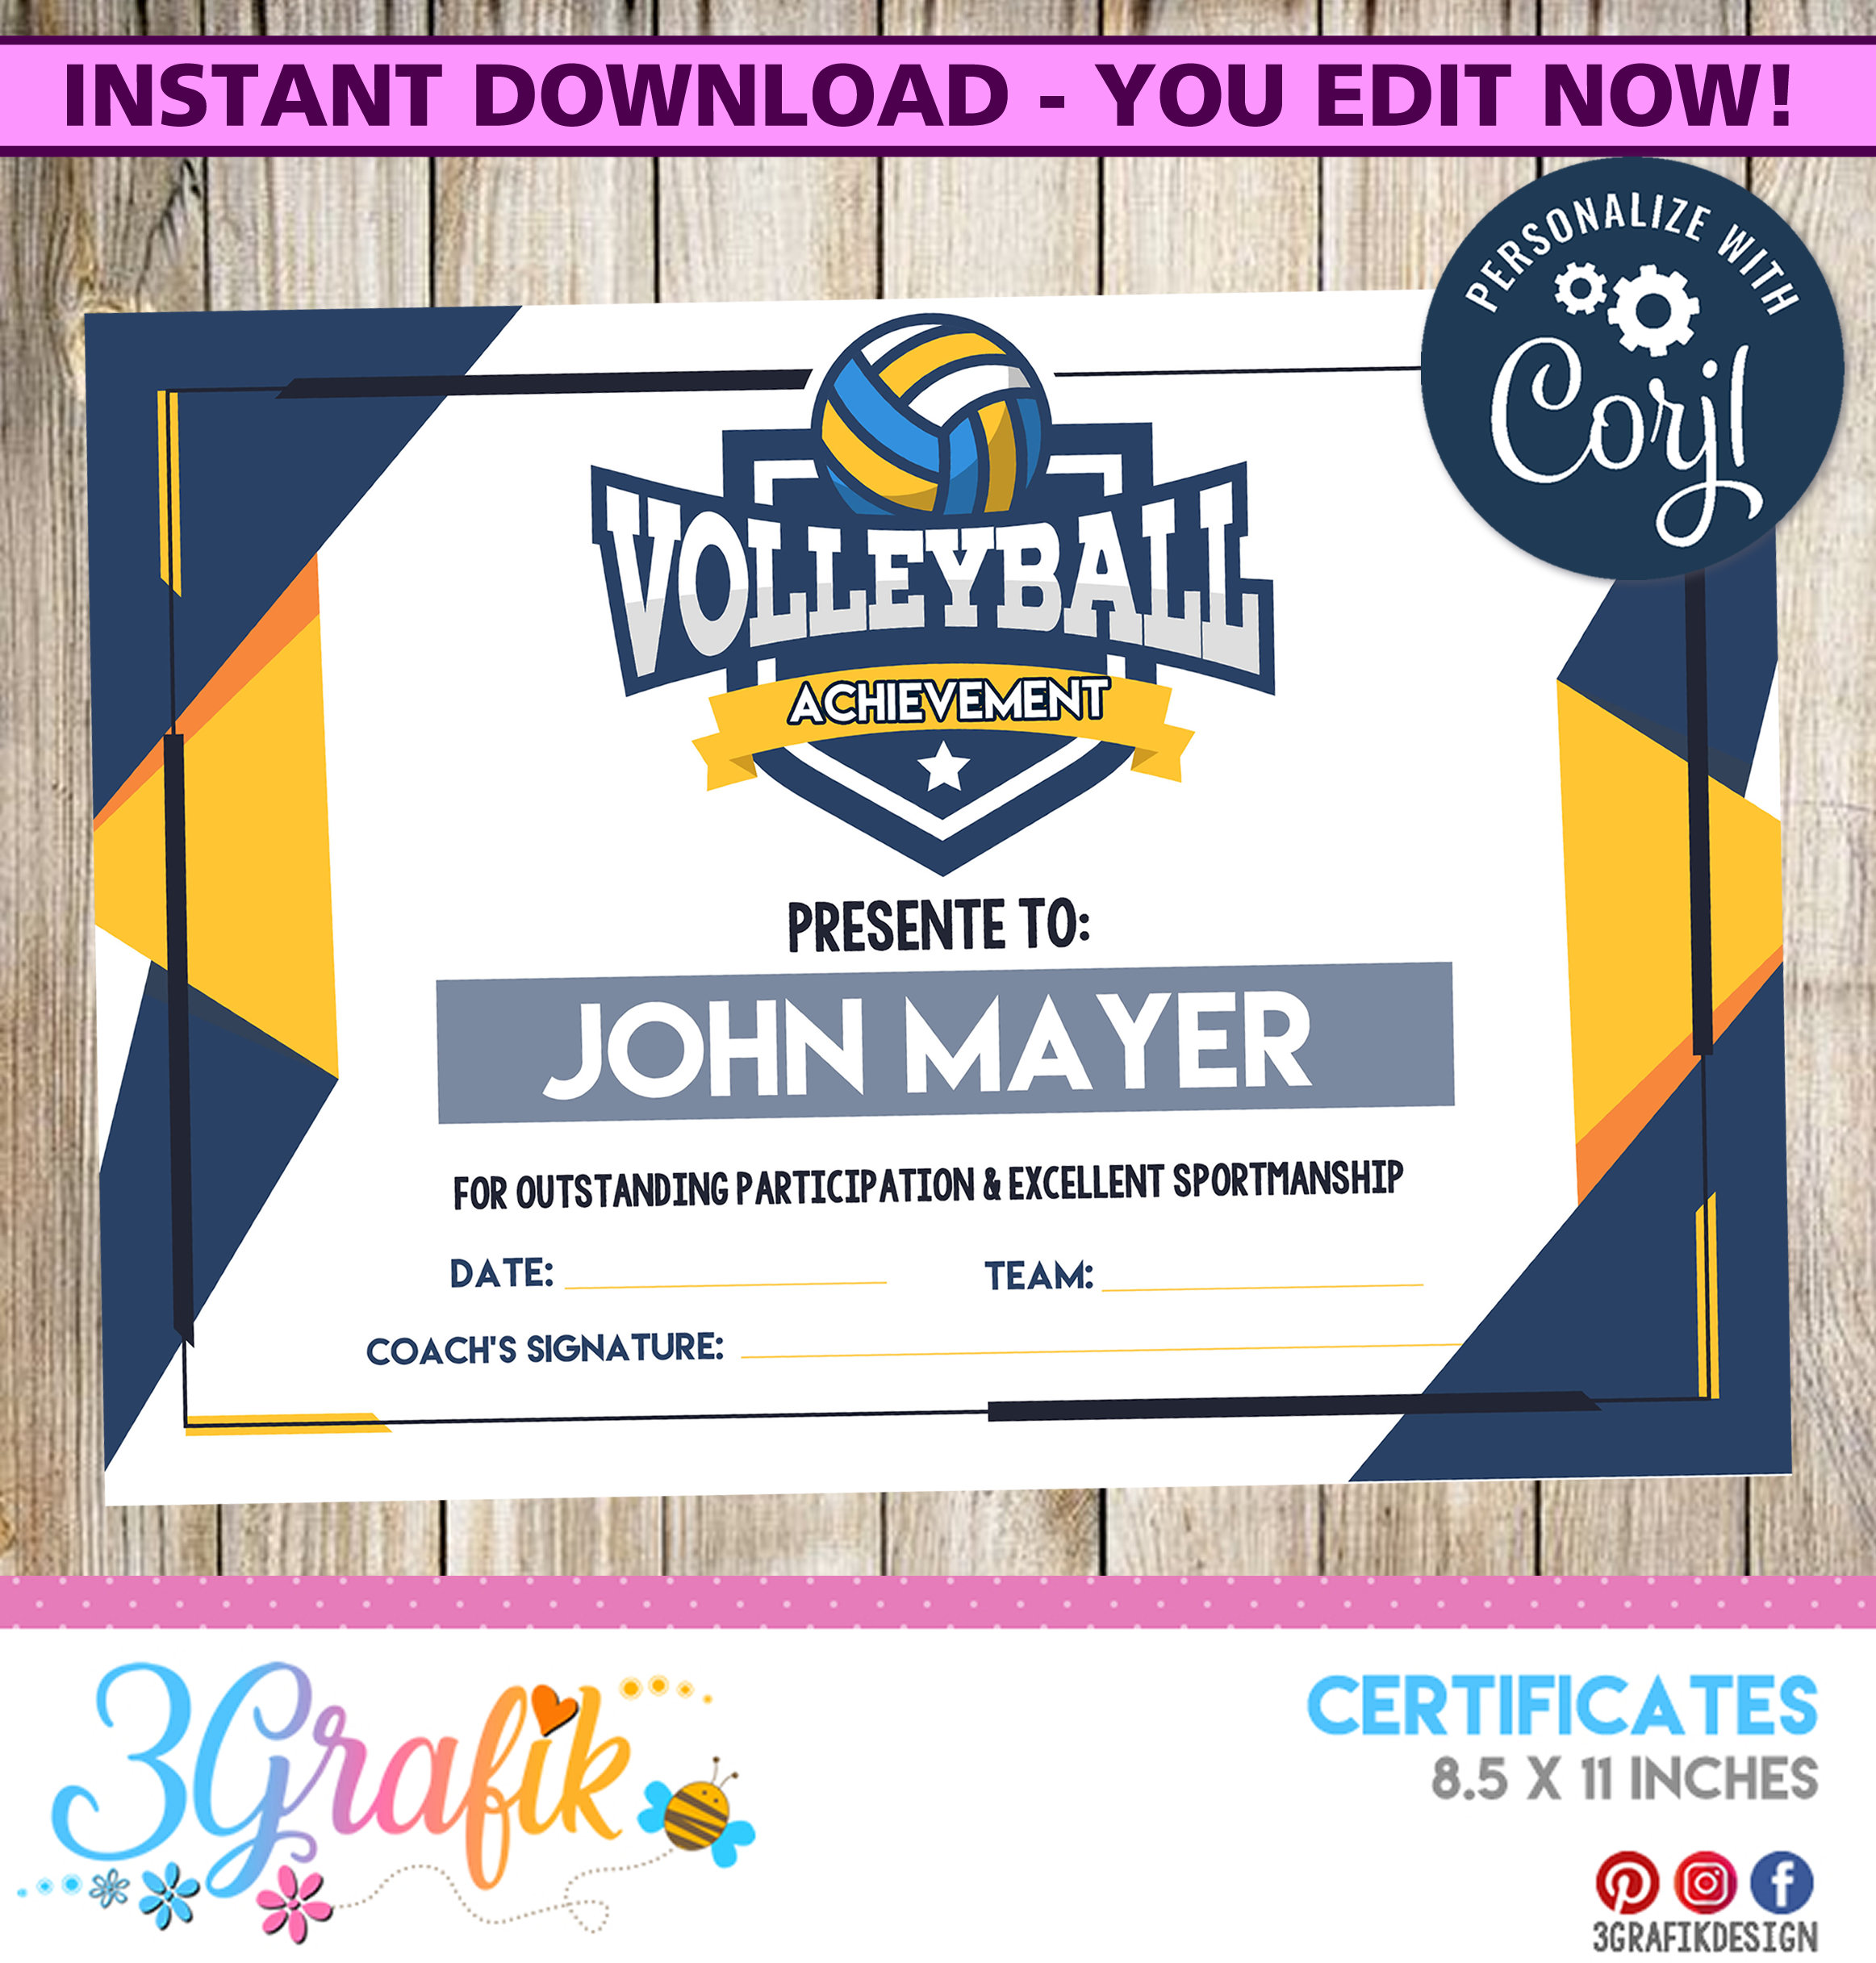 volleyball-certificate-party-supplies-3grafik